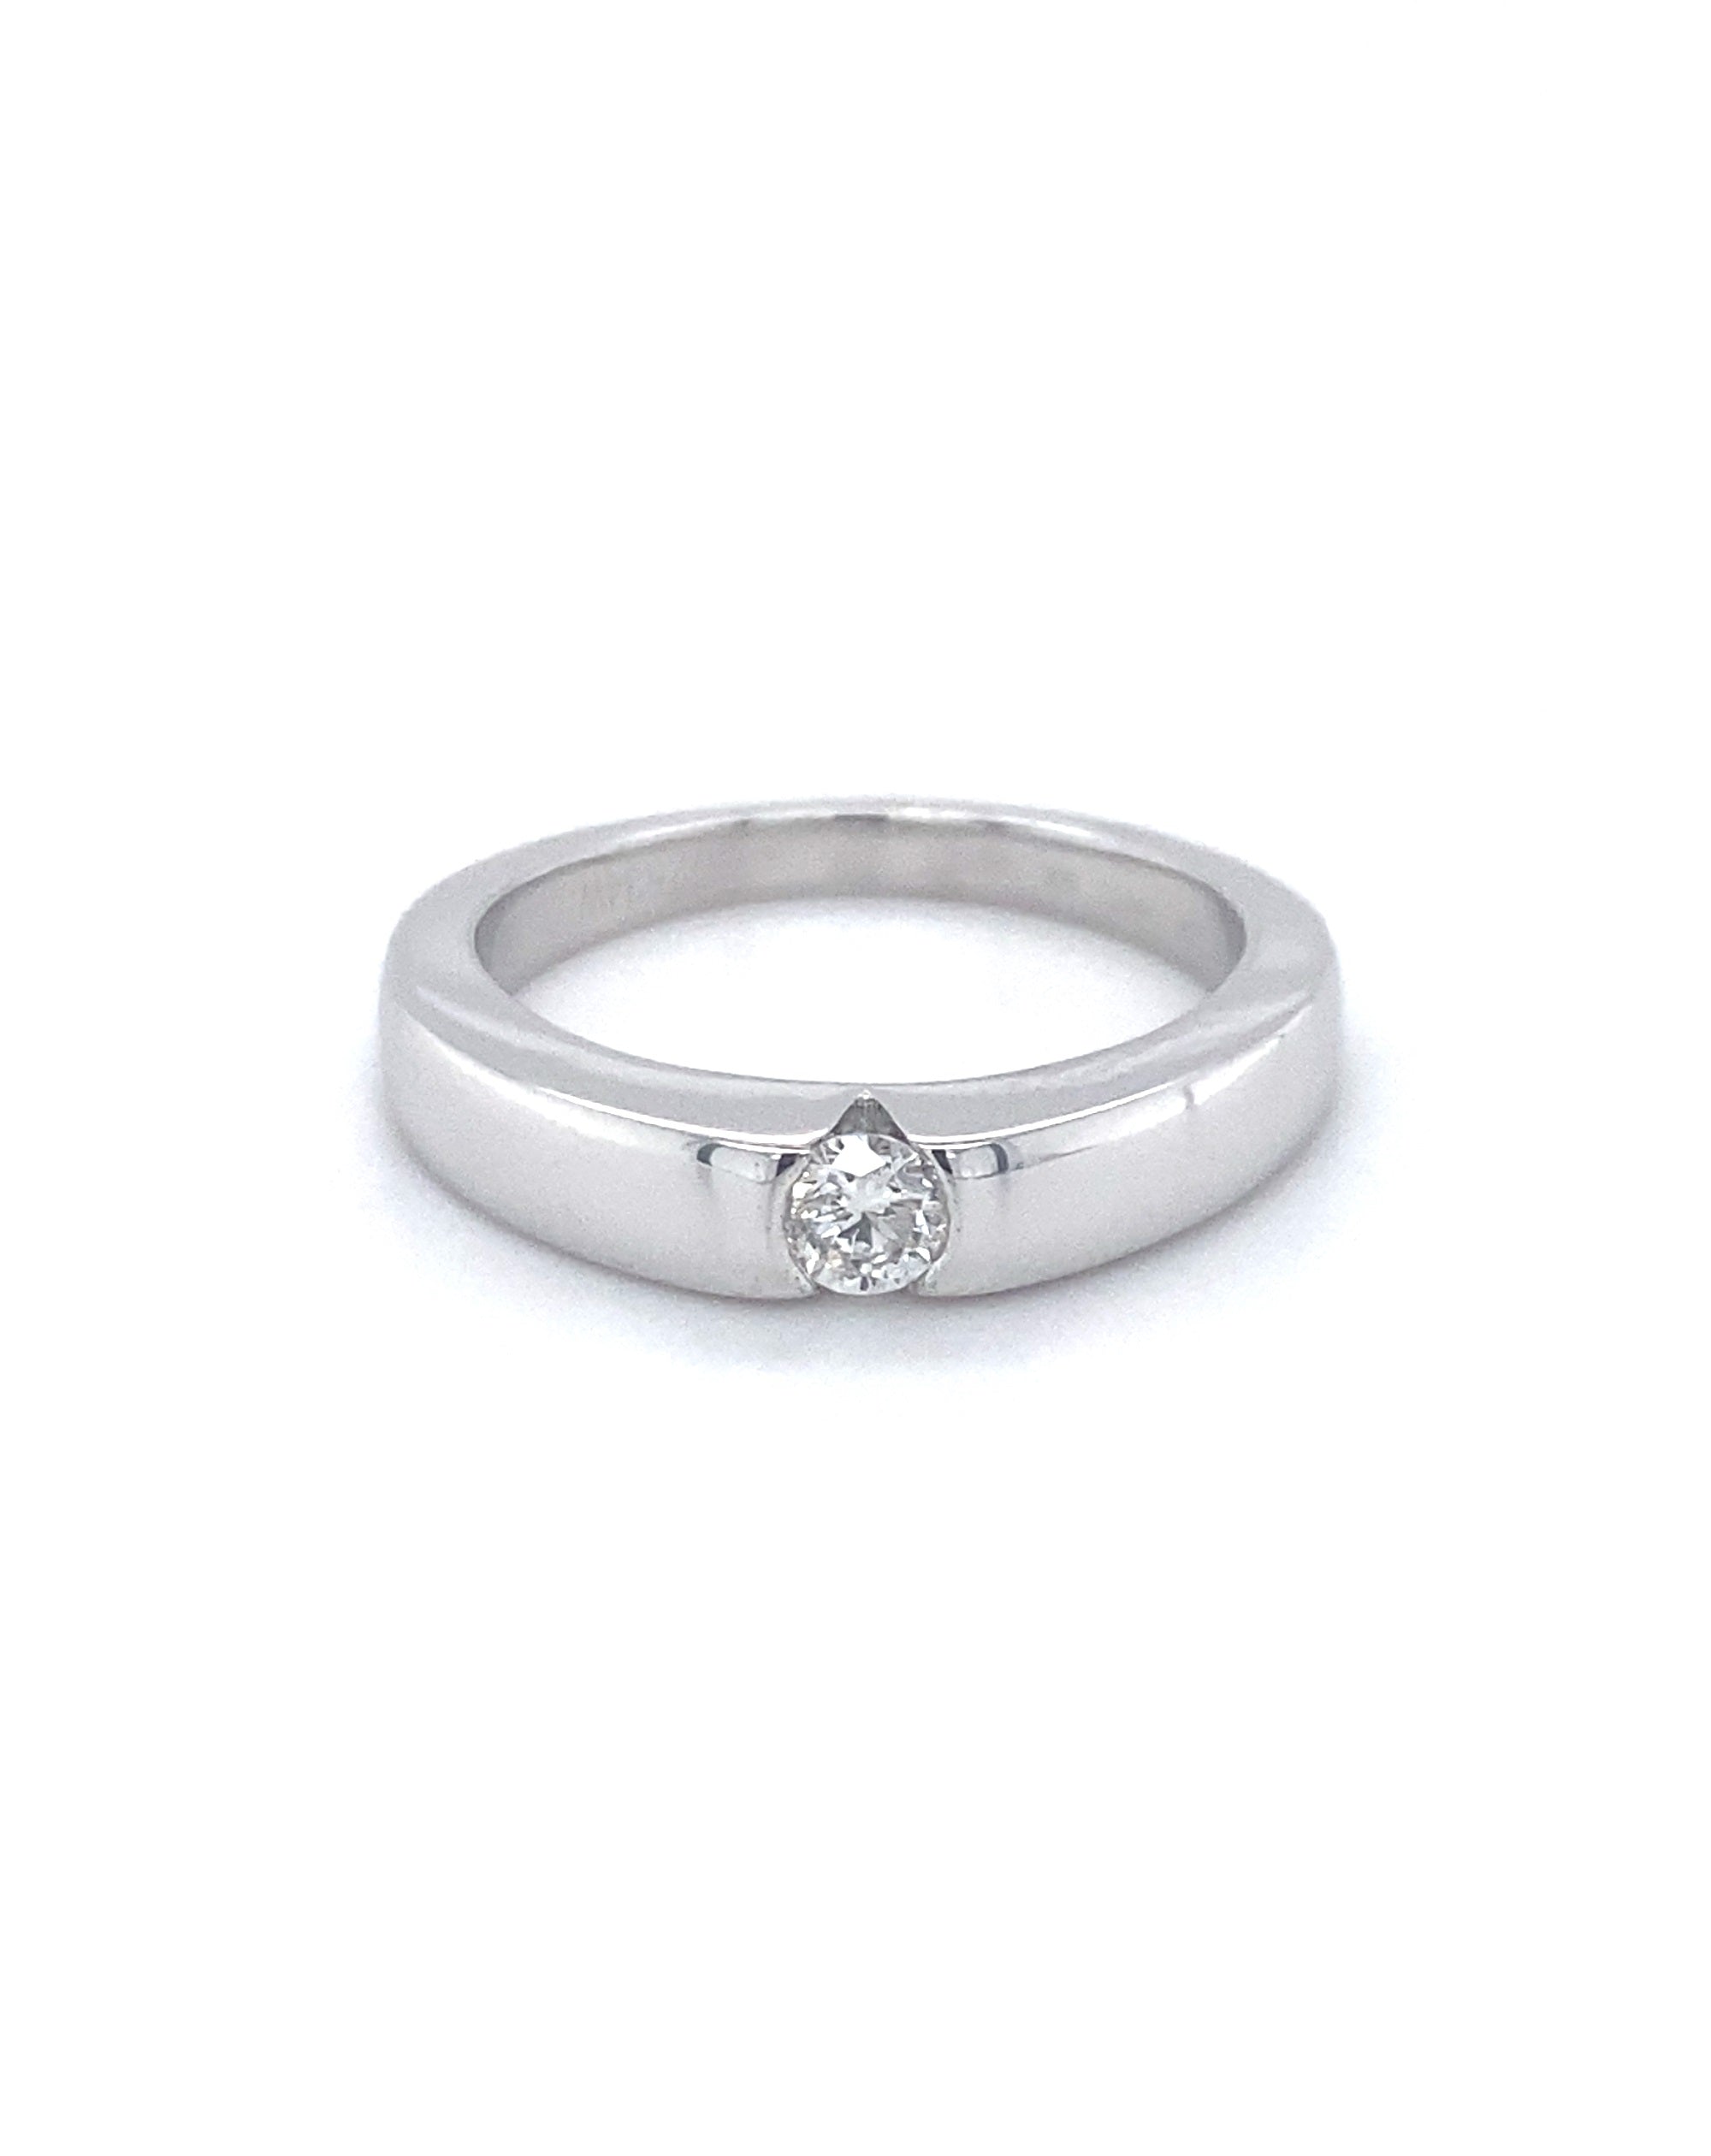 One Carat Diamond Ring Set | Moddlinc | High Quality Diamonds